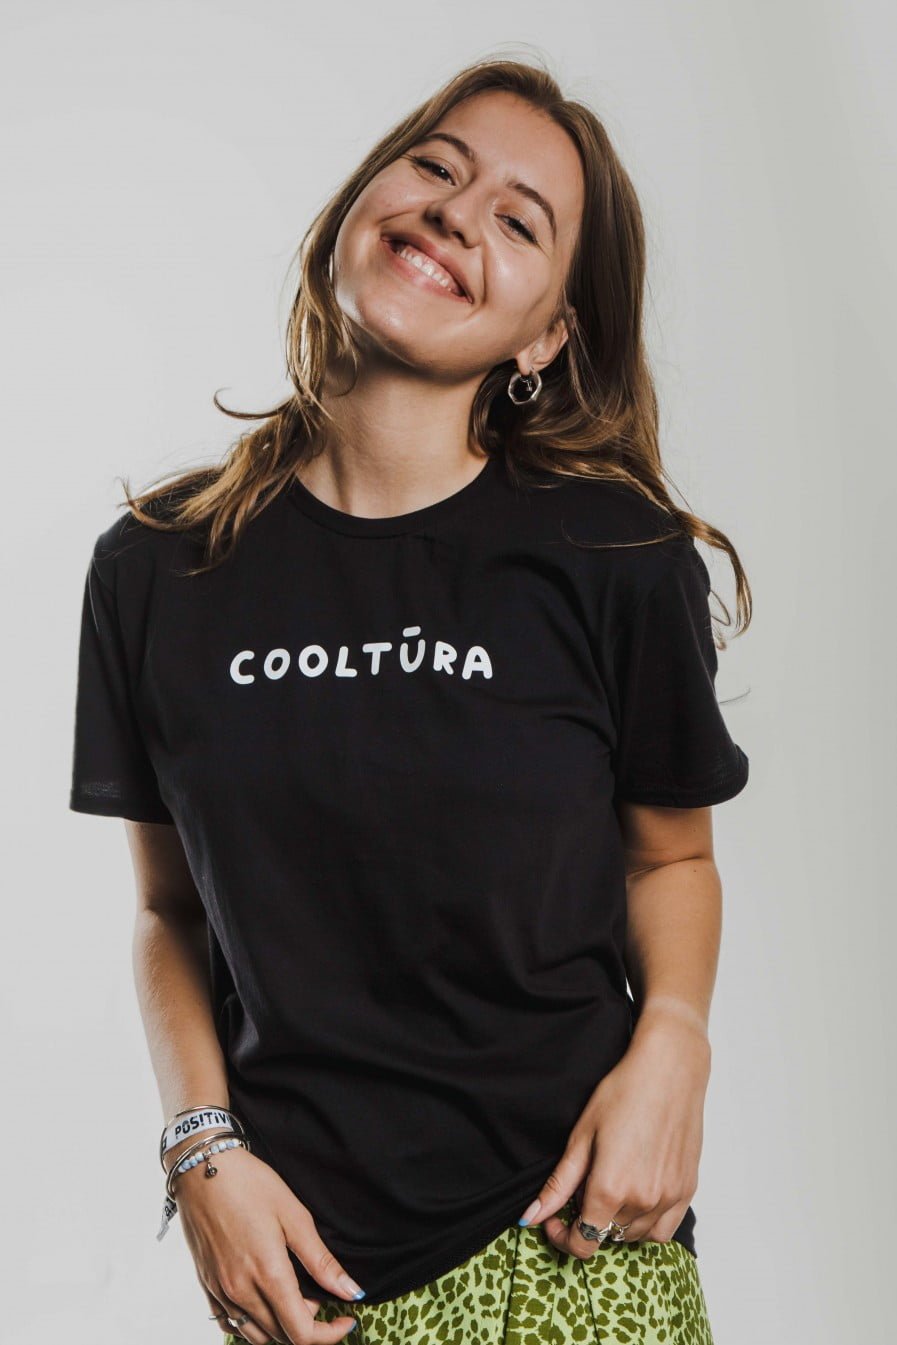 iidziiba Unisex t-shirt "Cooltūra"